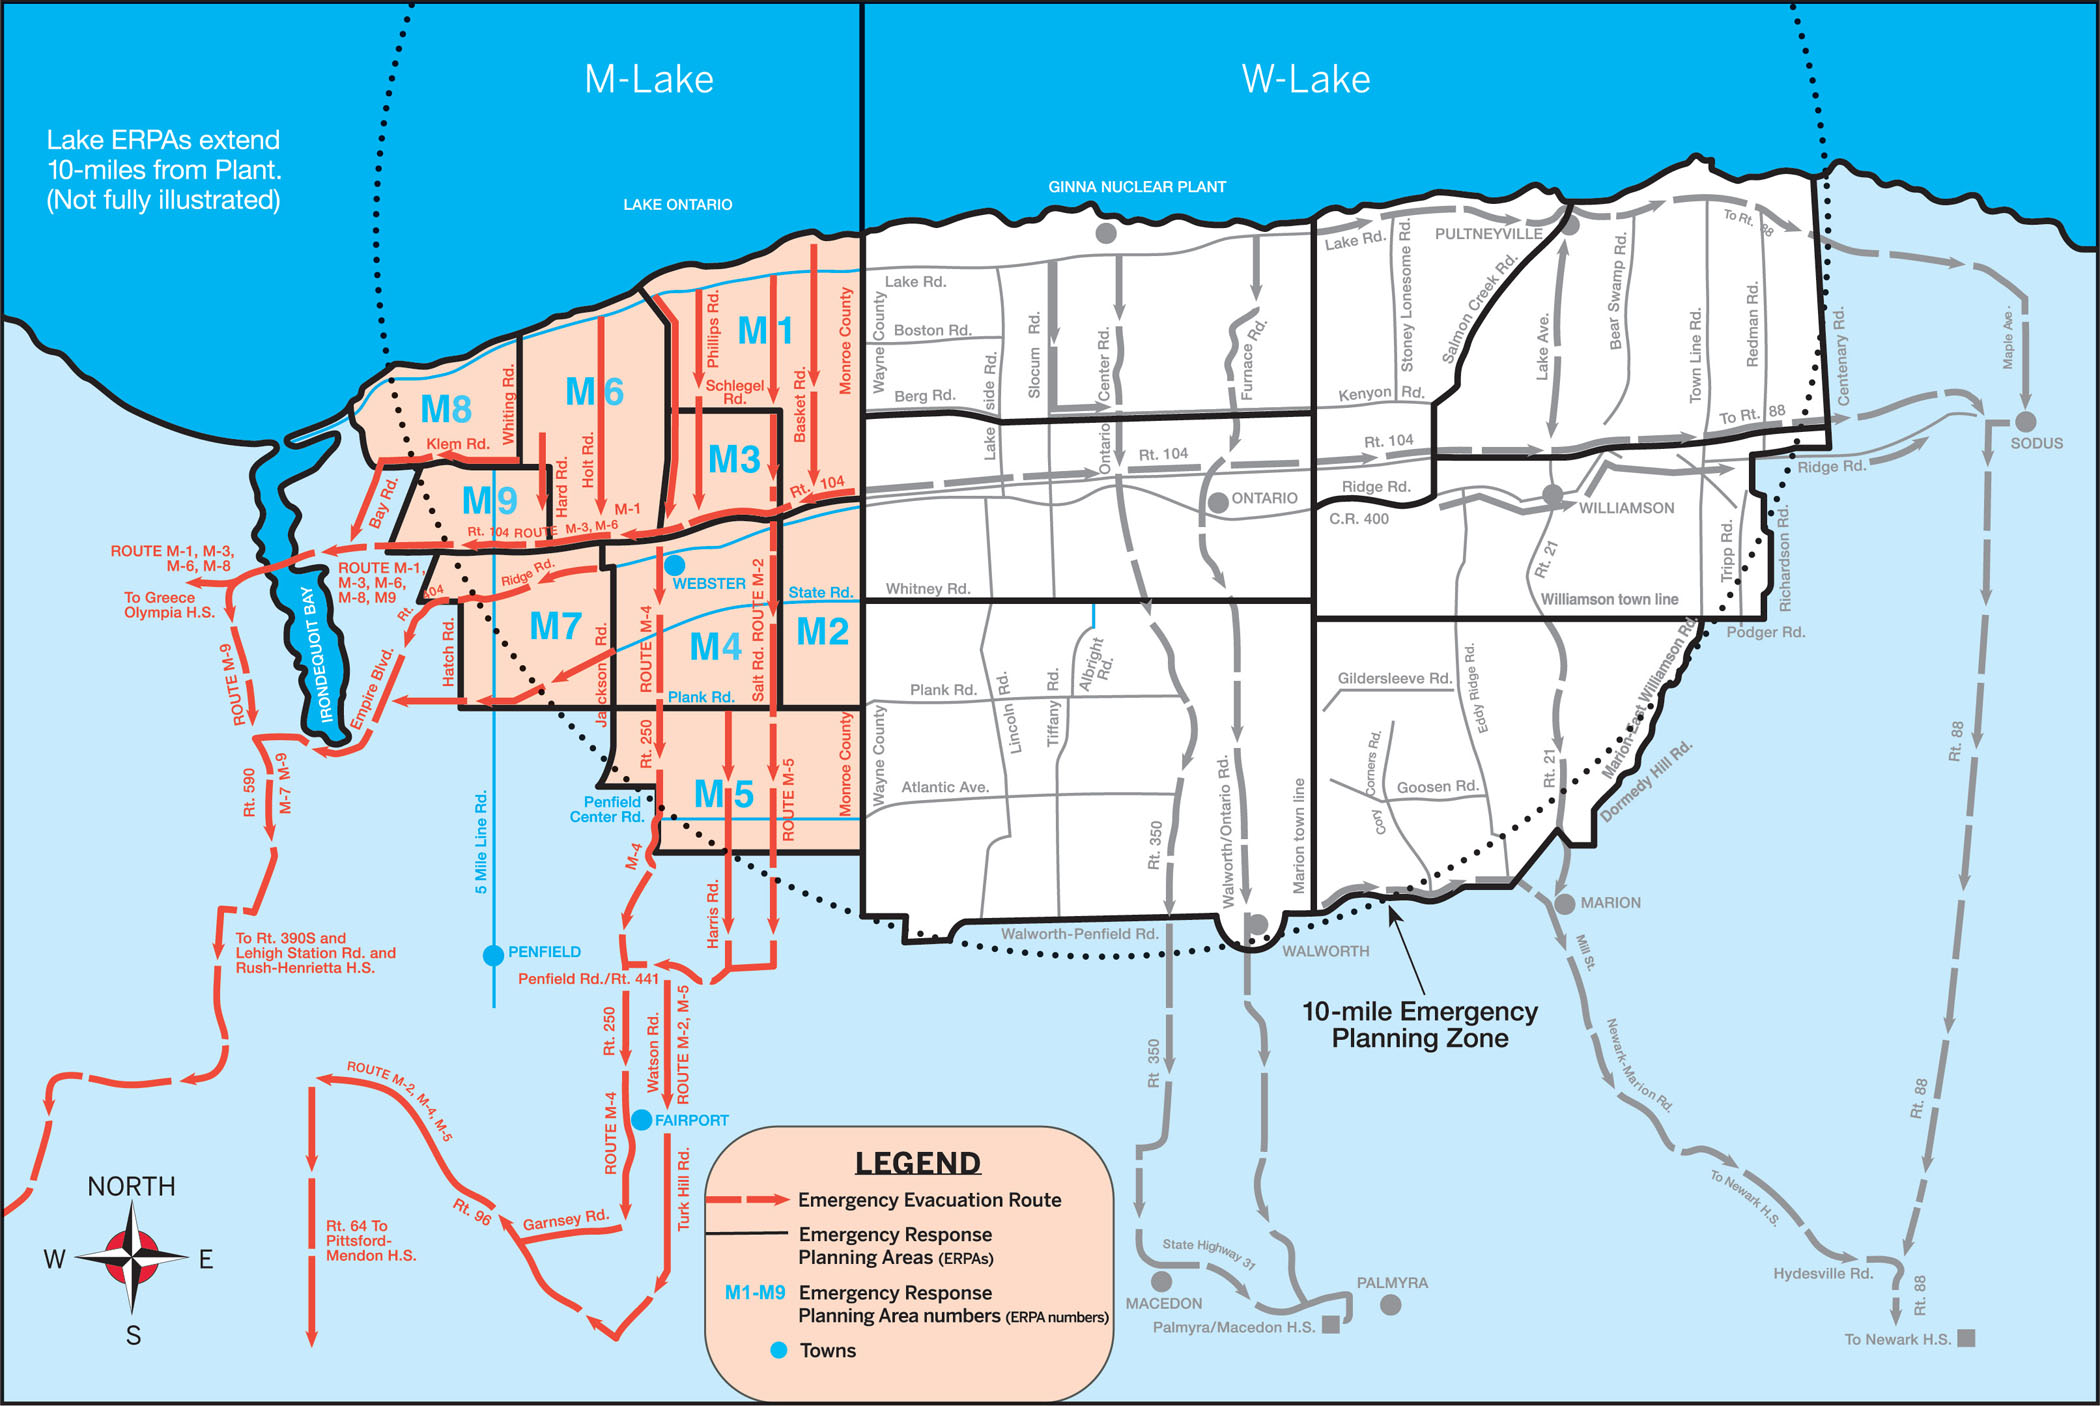 Monroe County Emergency Response Planning Areas (ERPAs)